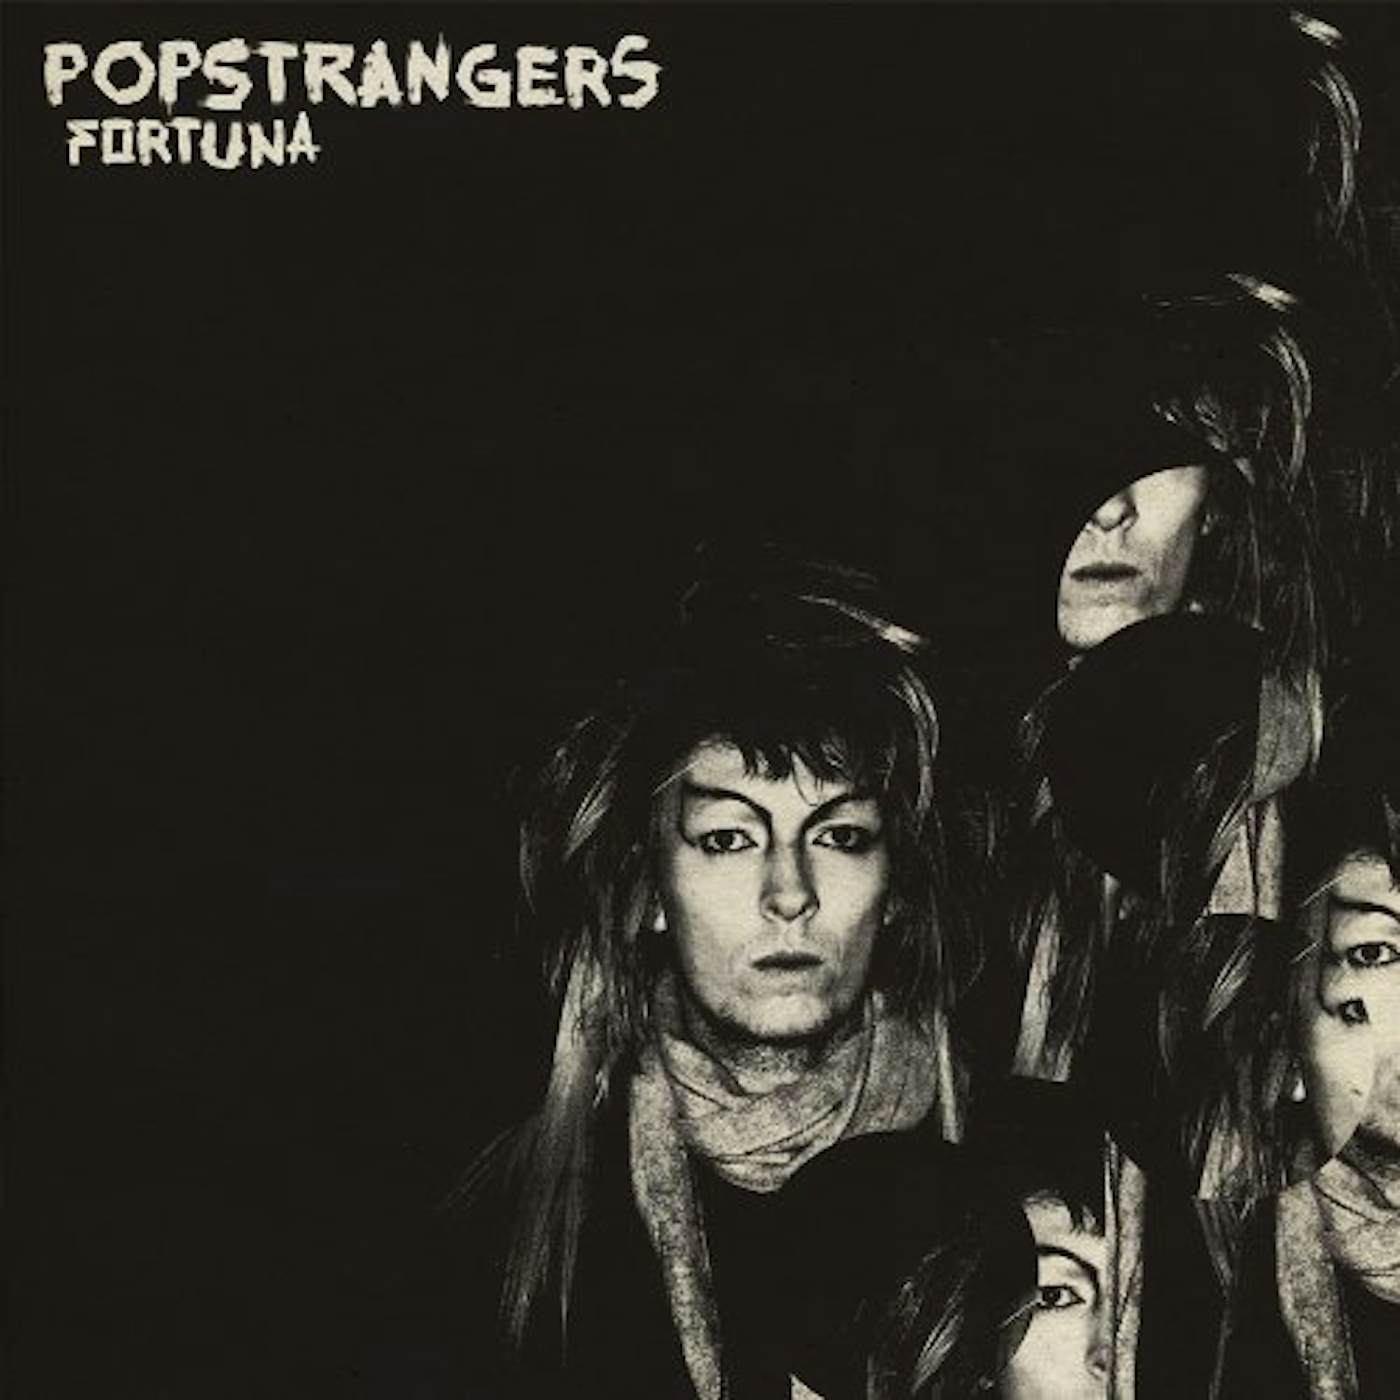 Popstrangers Fortuna Vinyl Record